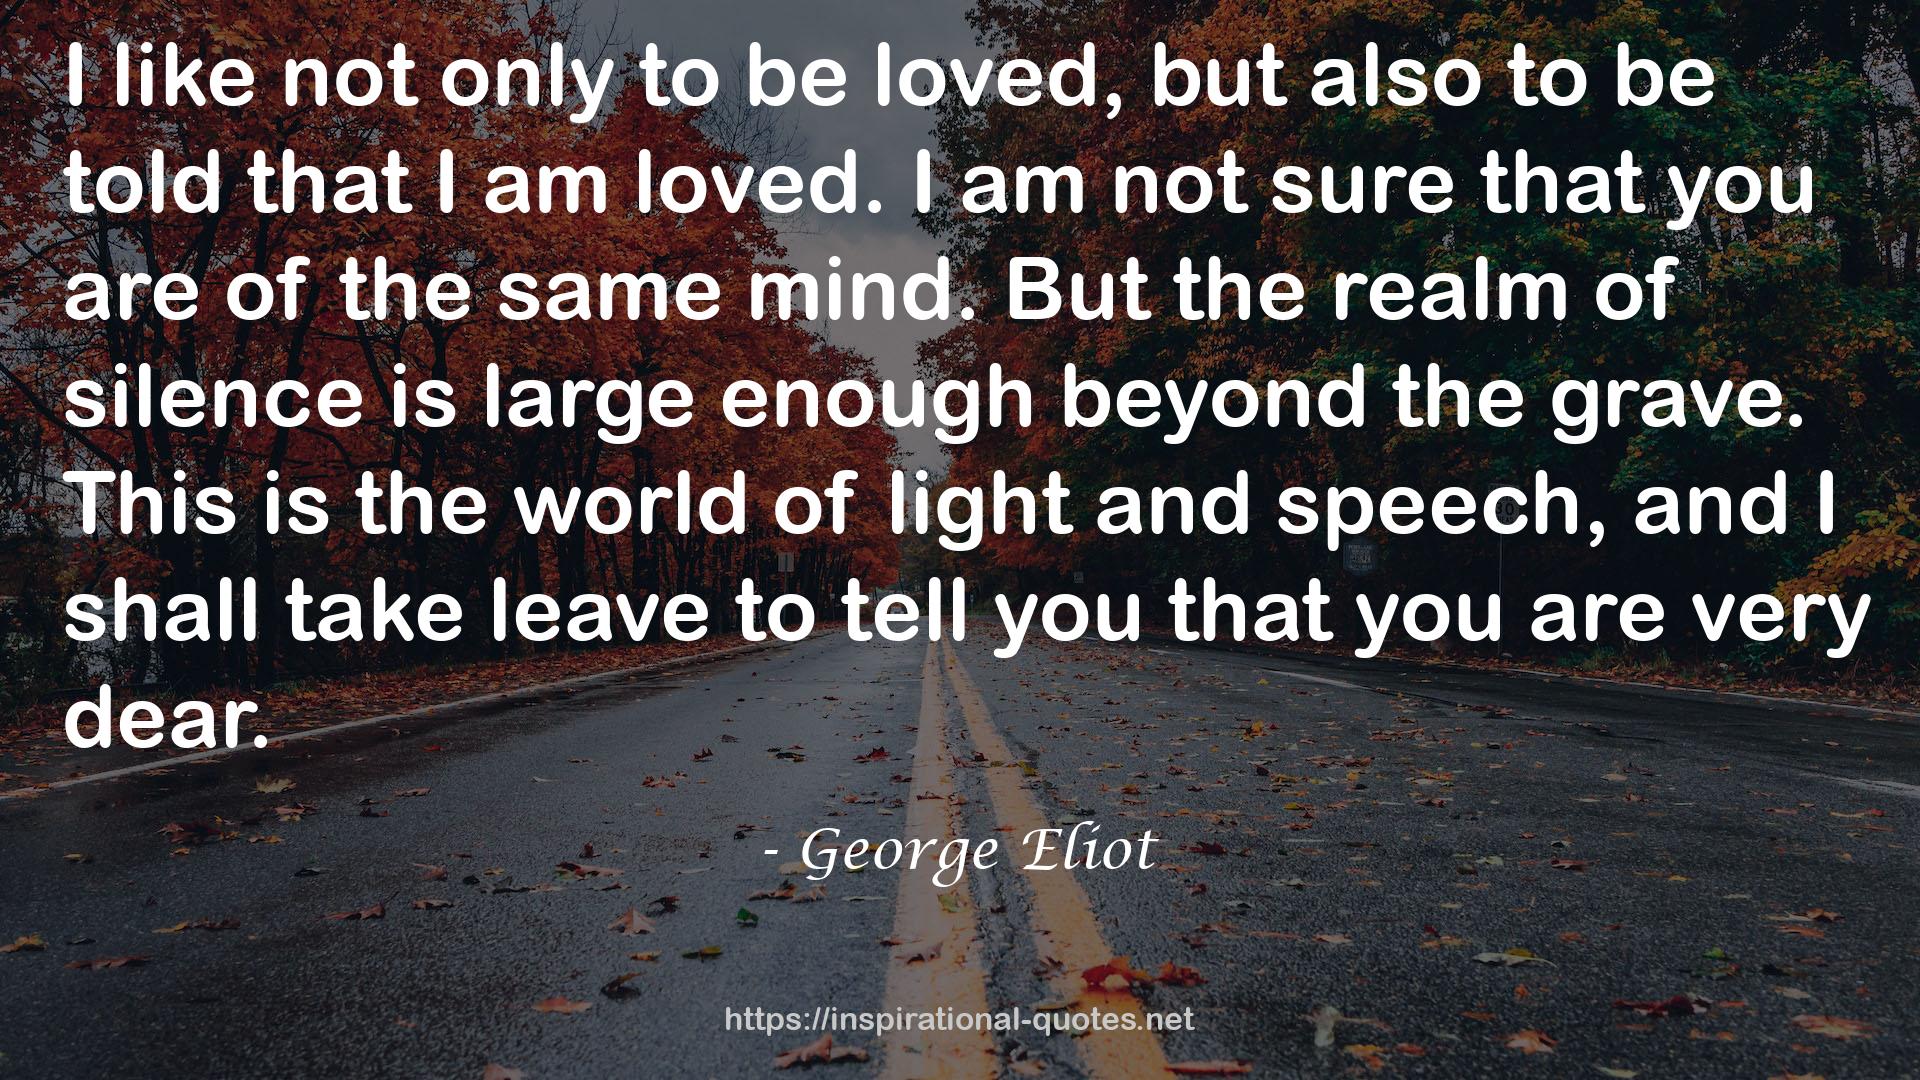 George Eliot QUOTES